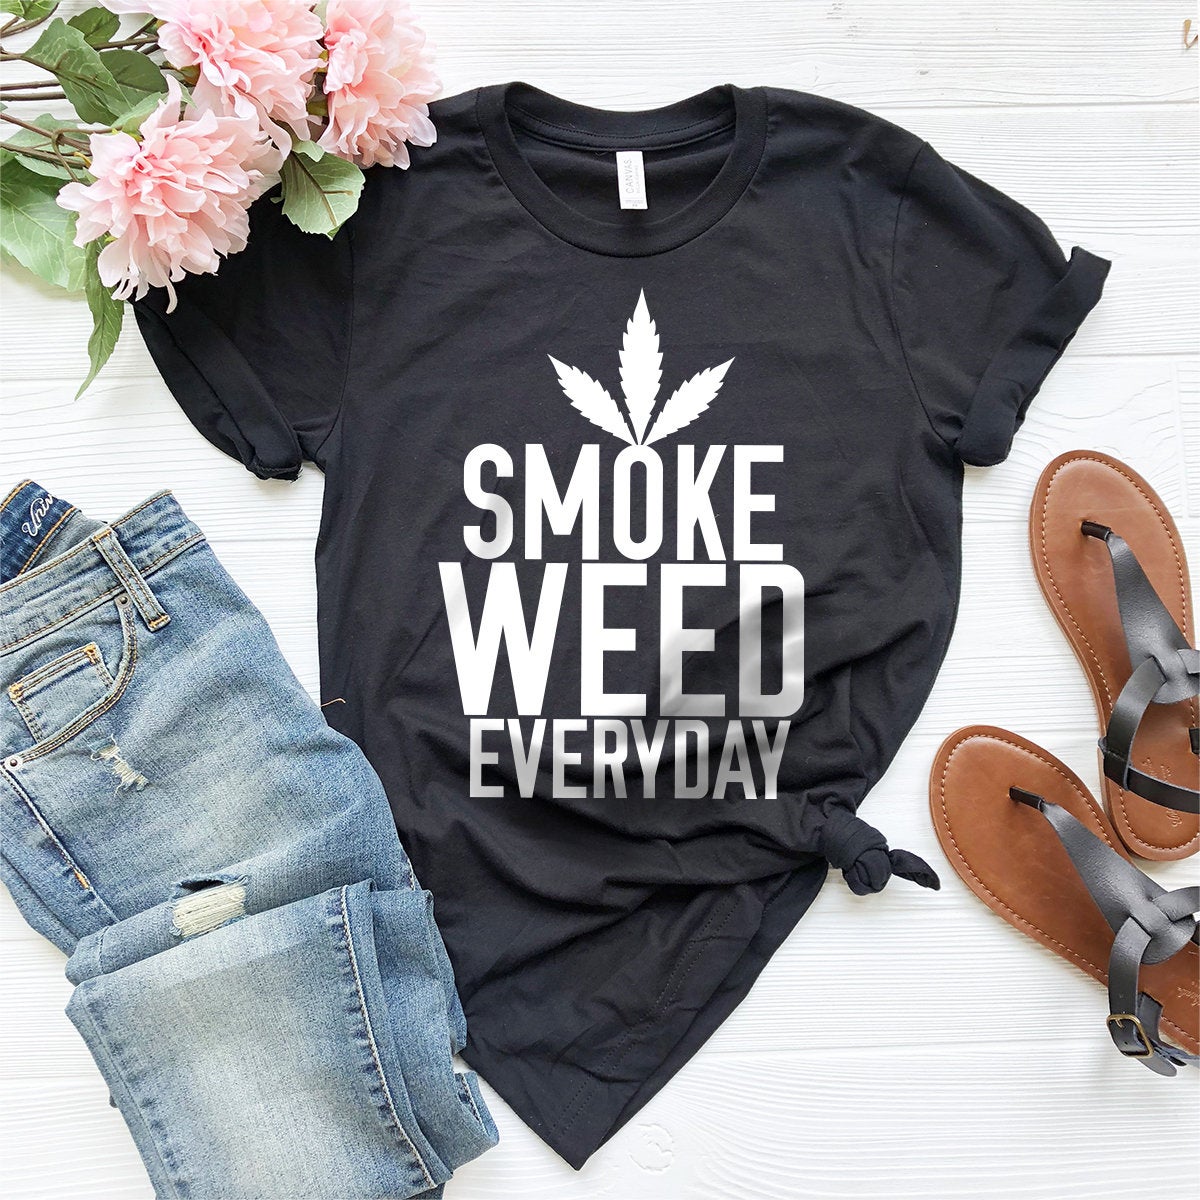 Smoke Weed Everyday Shirt, Weed Shirt, Weed T-shirt, Weed Tee, Funny Weed Shirt, Marijuana Shirt, Stoner Shirt,Cannabis Shirt, - Fastdeliverytees.com